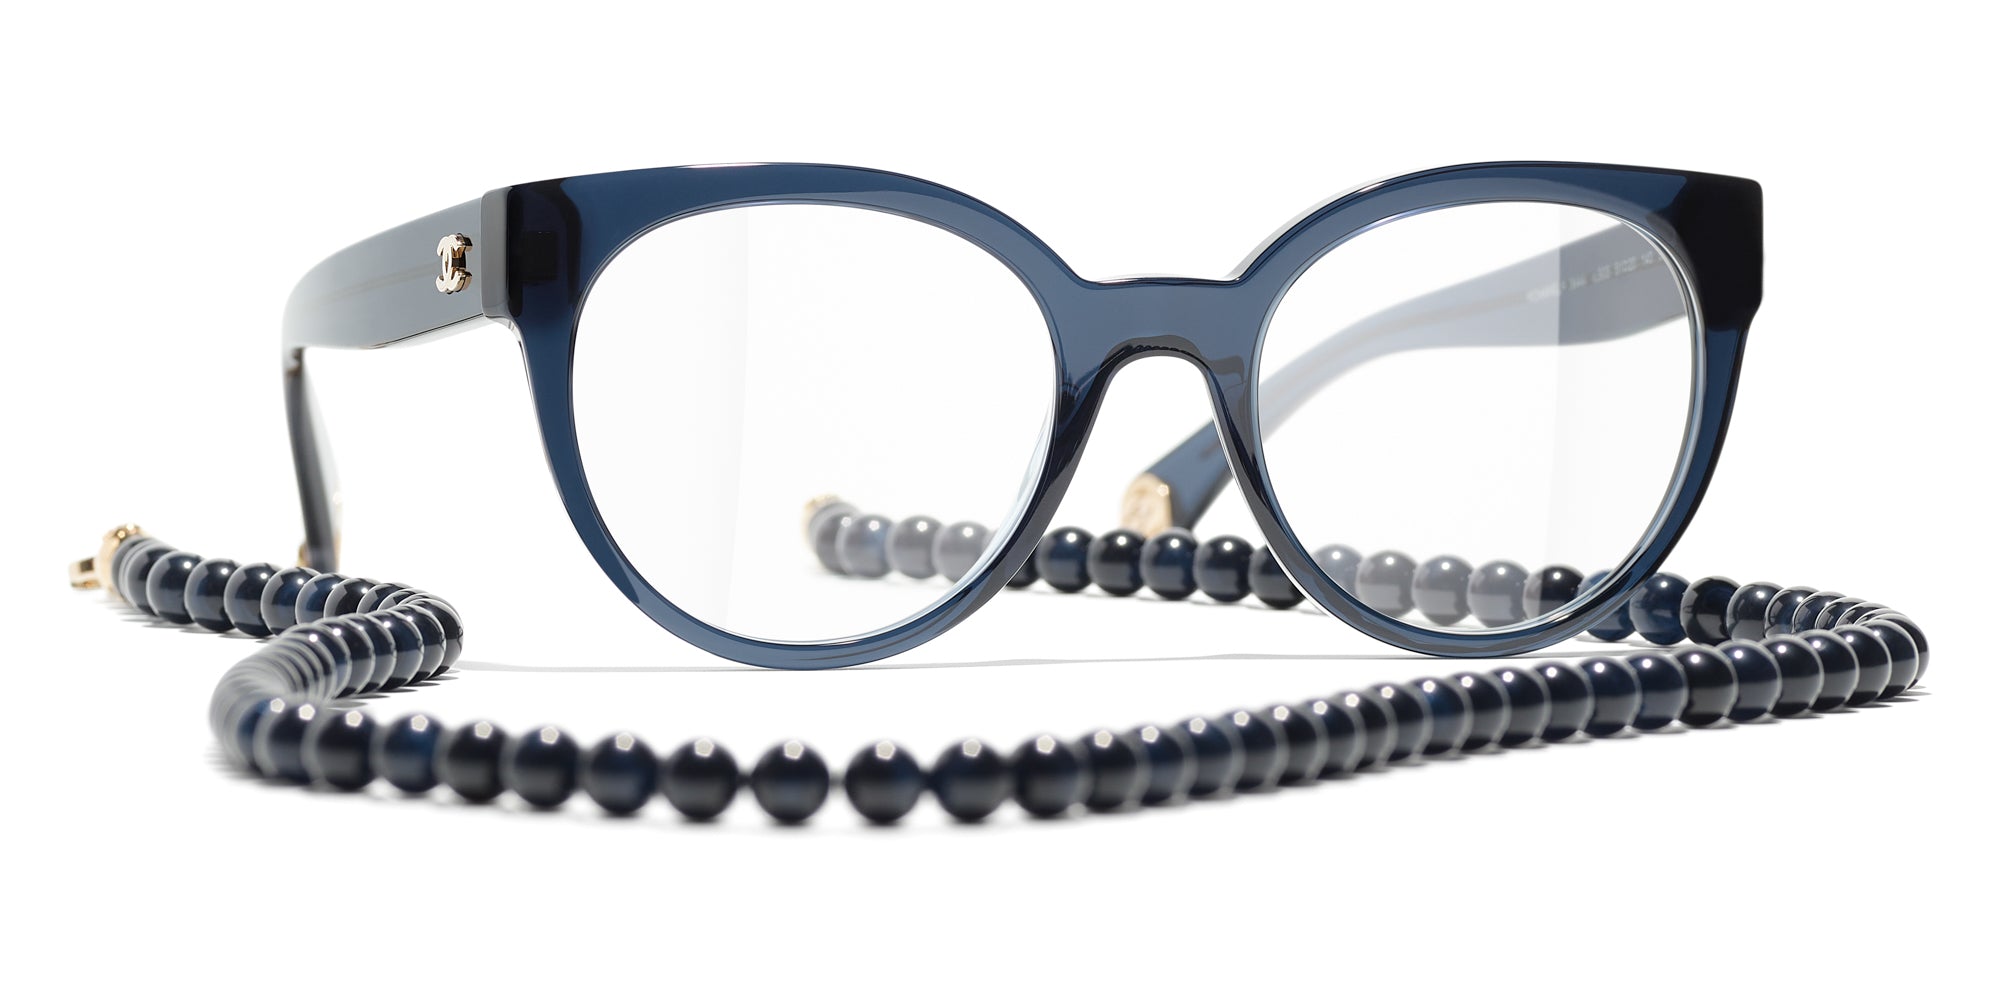 Chanel Eyewear Butterfly Frame Glasses - ShopStyle Eyeglasses